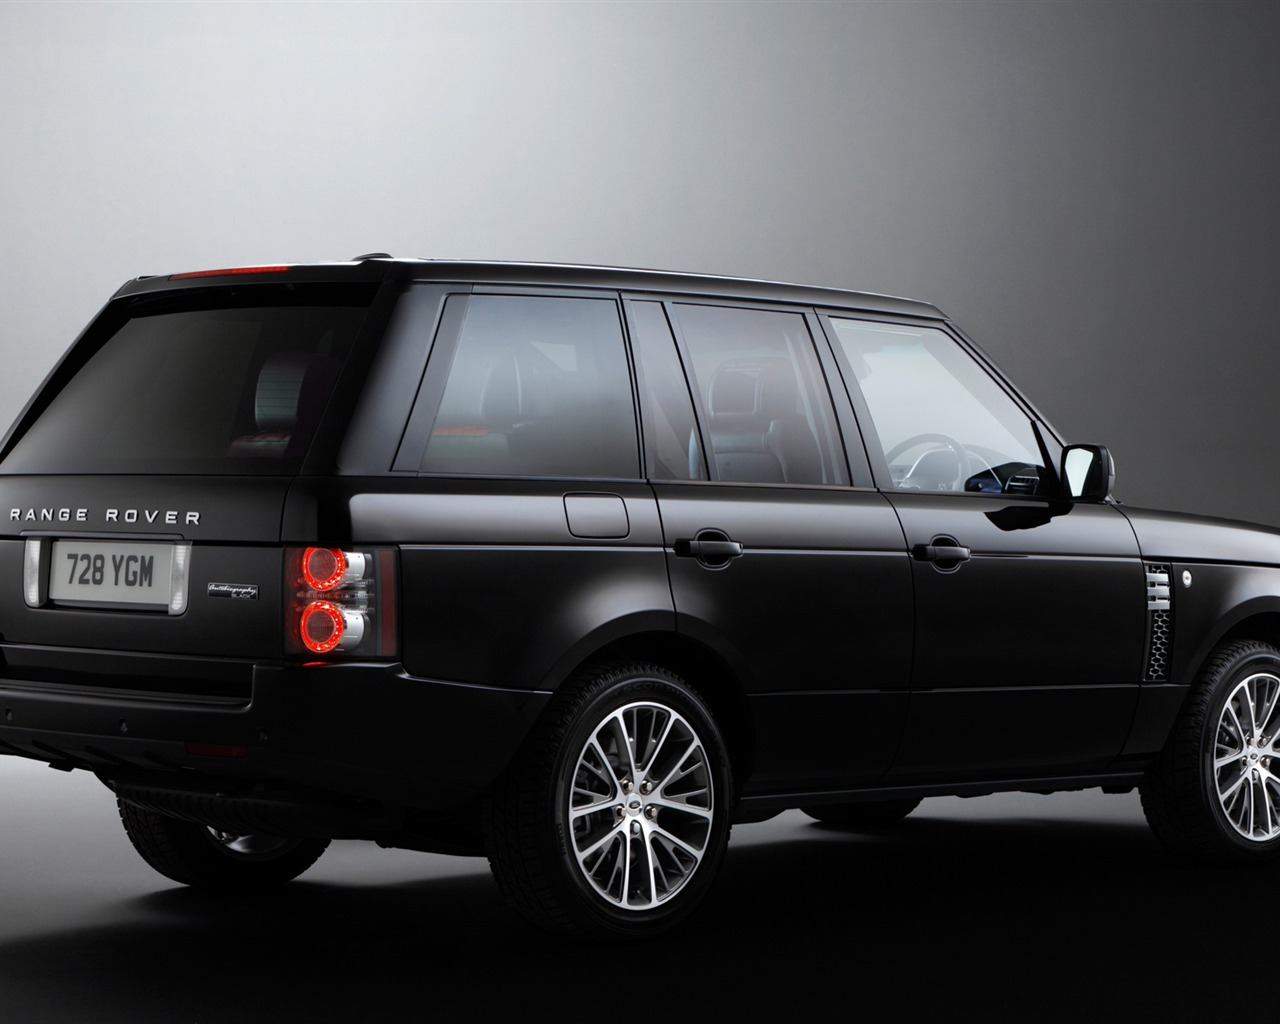 Land Rover Range Rover Black Edition - 2011 路虎19 - 1280x1024